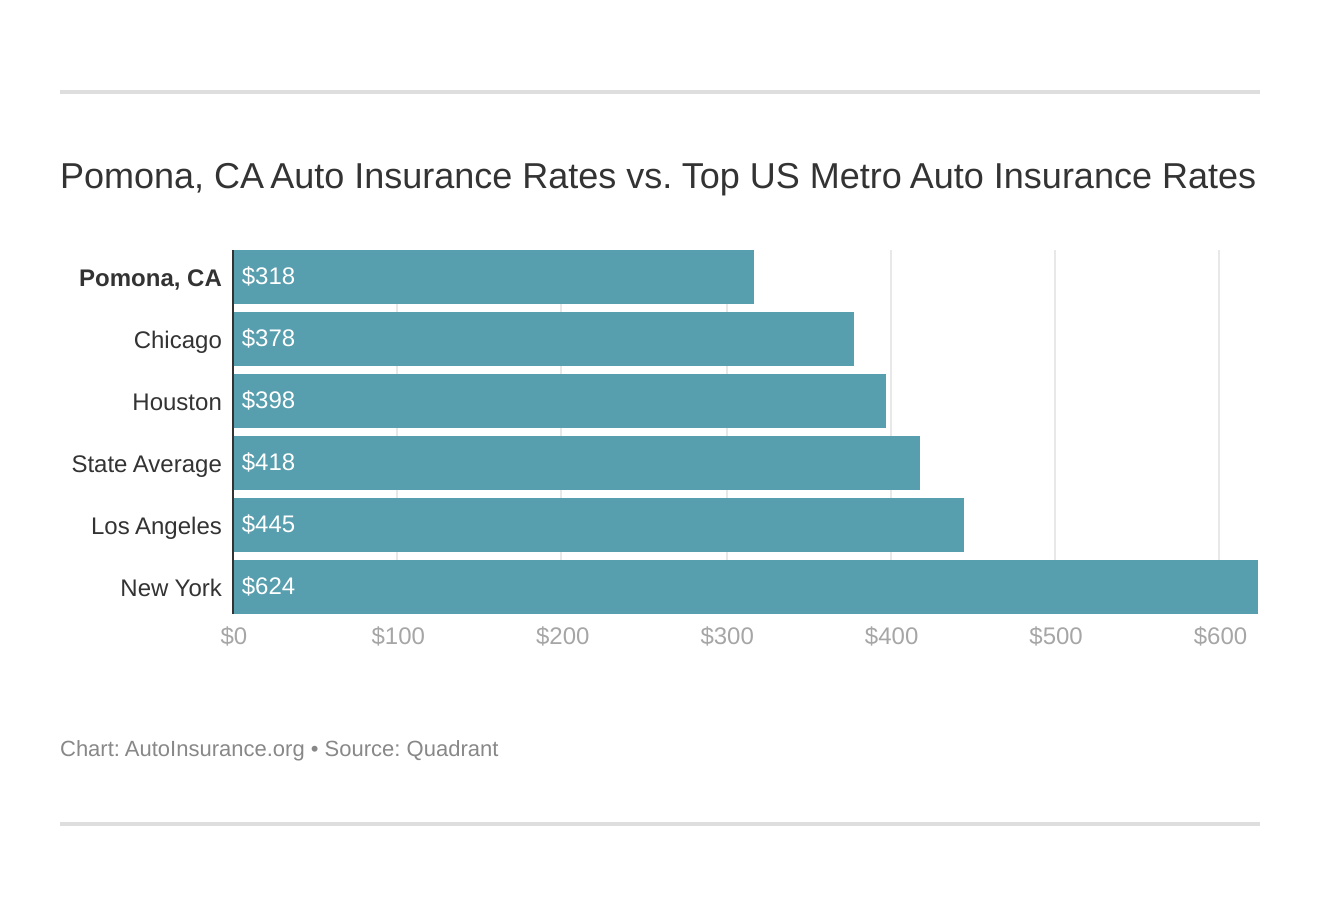 Pomona, CA Auto Insurance Rates vs. Top US Metro Auto Insurance Rates